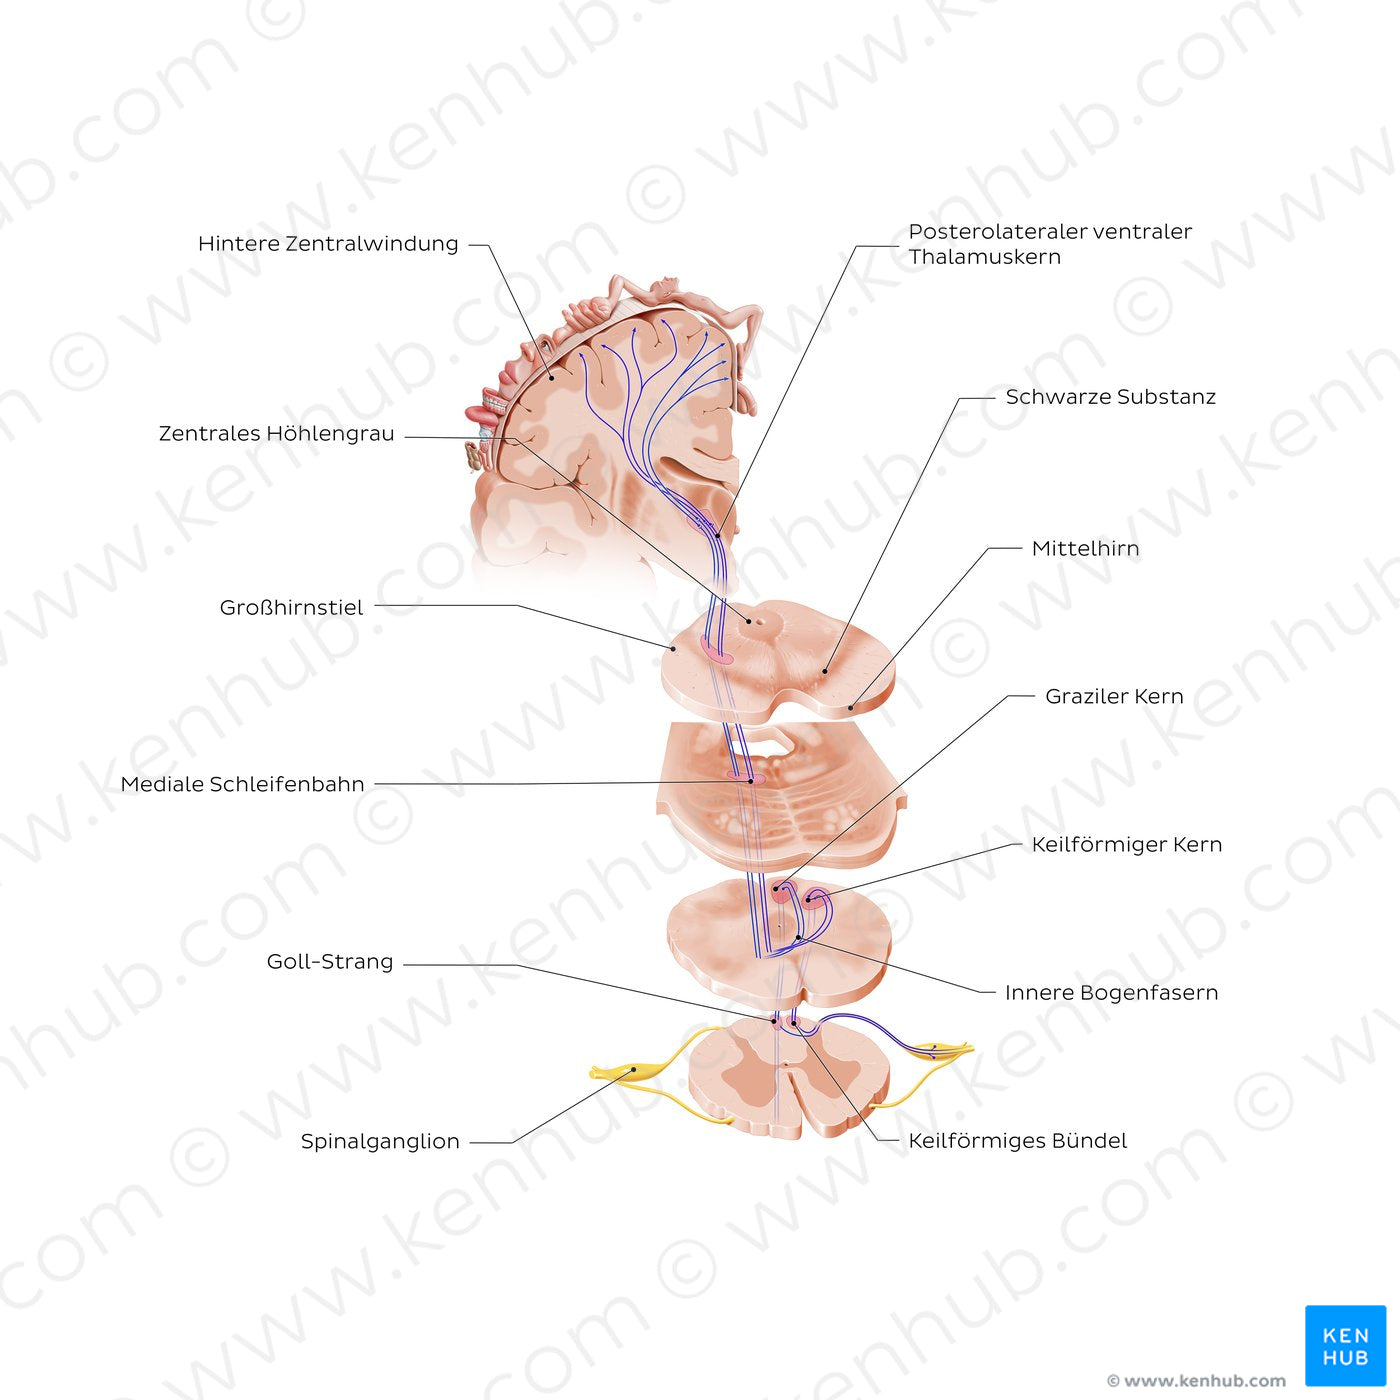 Posterior column-medial lemniscus pathway (PCML) (German)